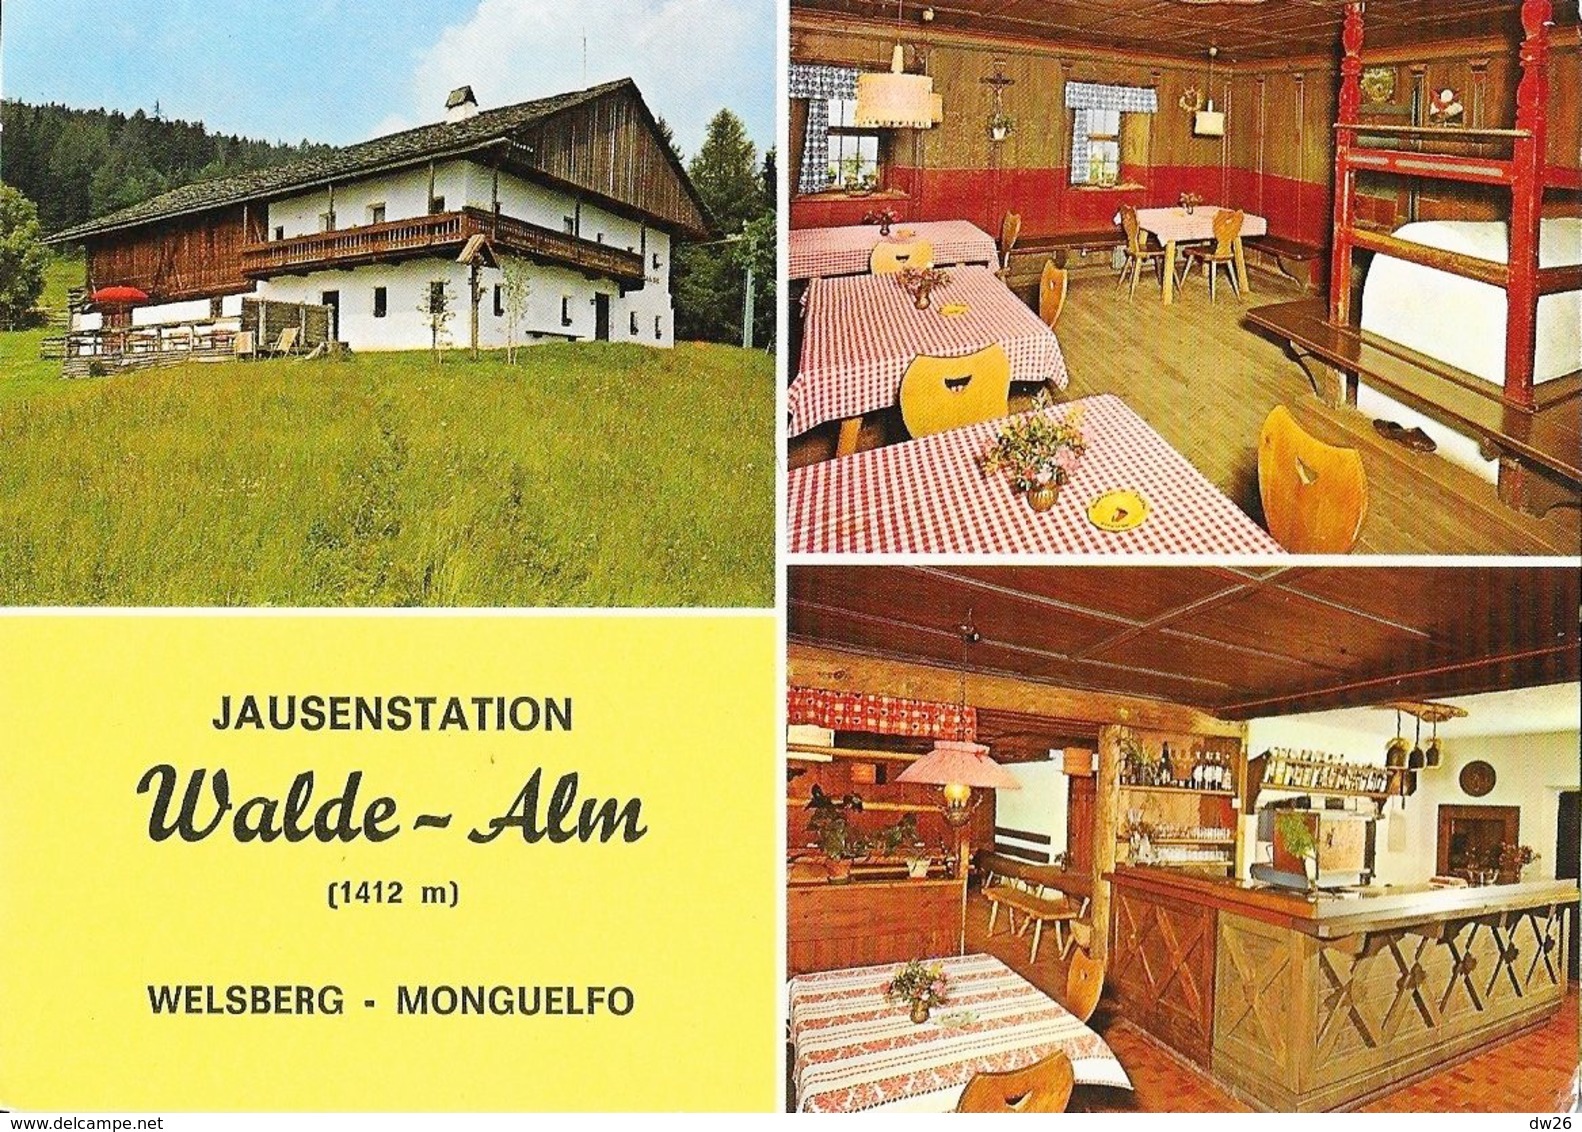 Jausenstation - Berggasthof Walde-alm - Welsberg Monguelfo Pustertal, Dolomiten Alto Adige - Restaurant - Hotels & Restaurants